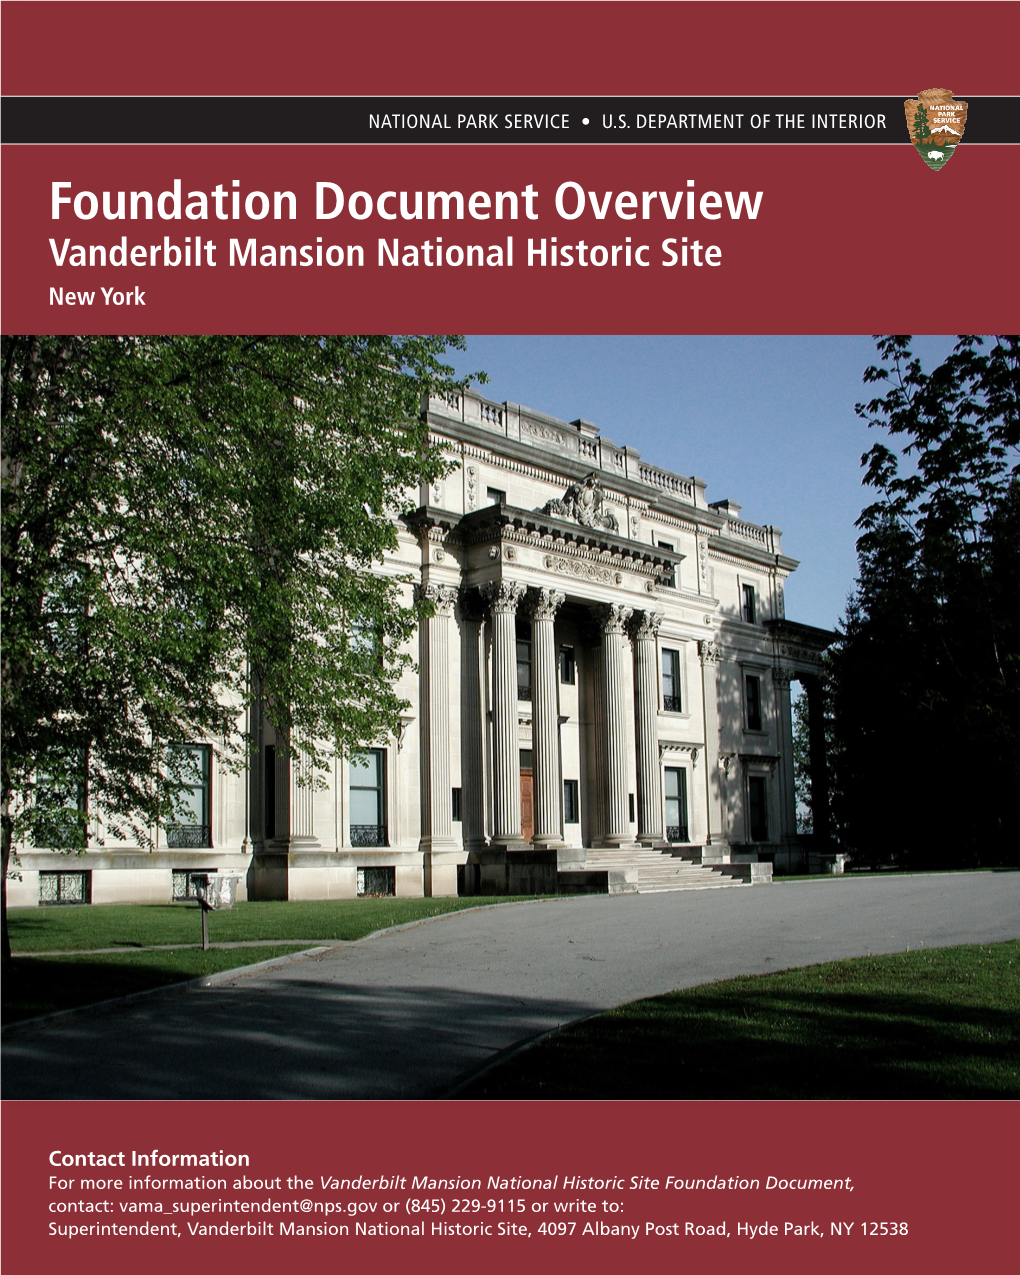 Vanderbilt Mansion National Historic Site Foundation Document Overview